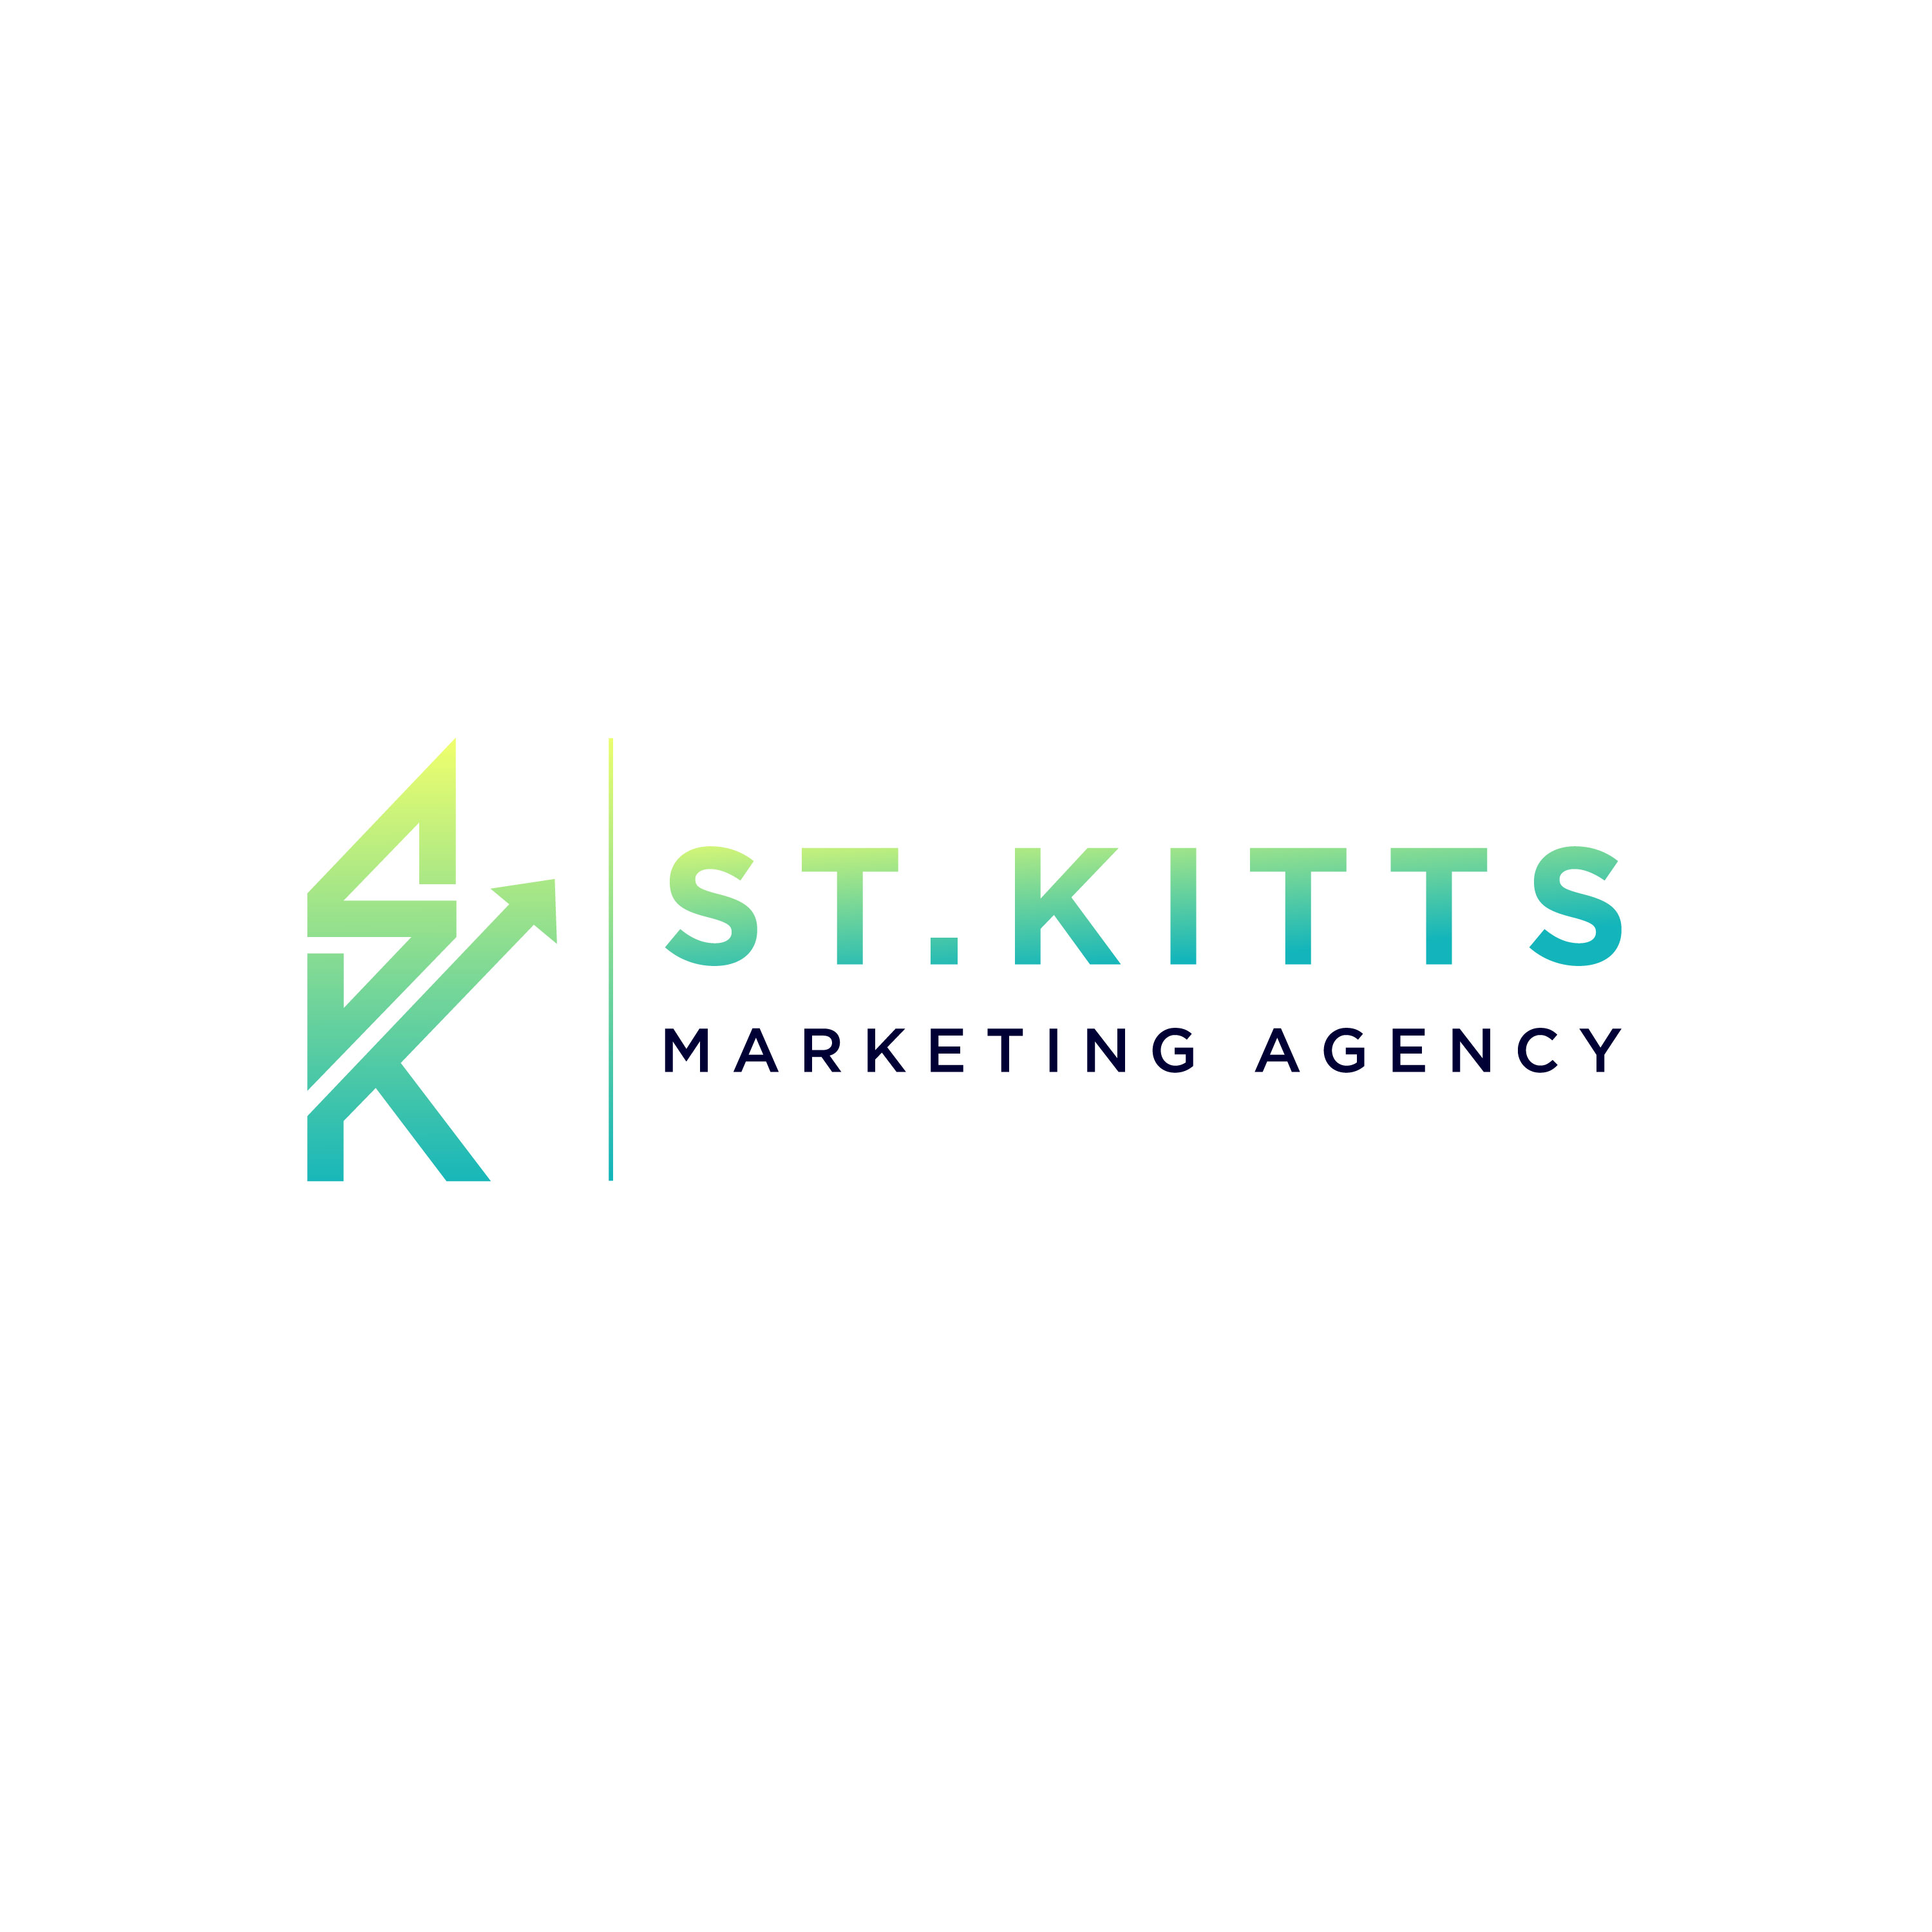 St.Kitts Marketing